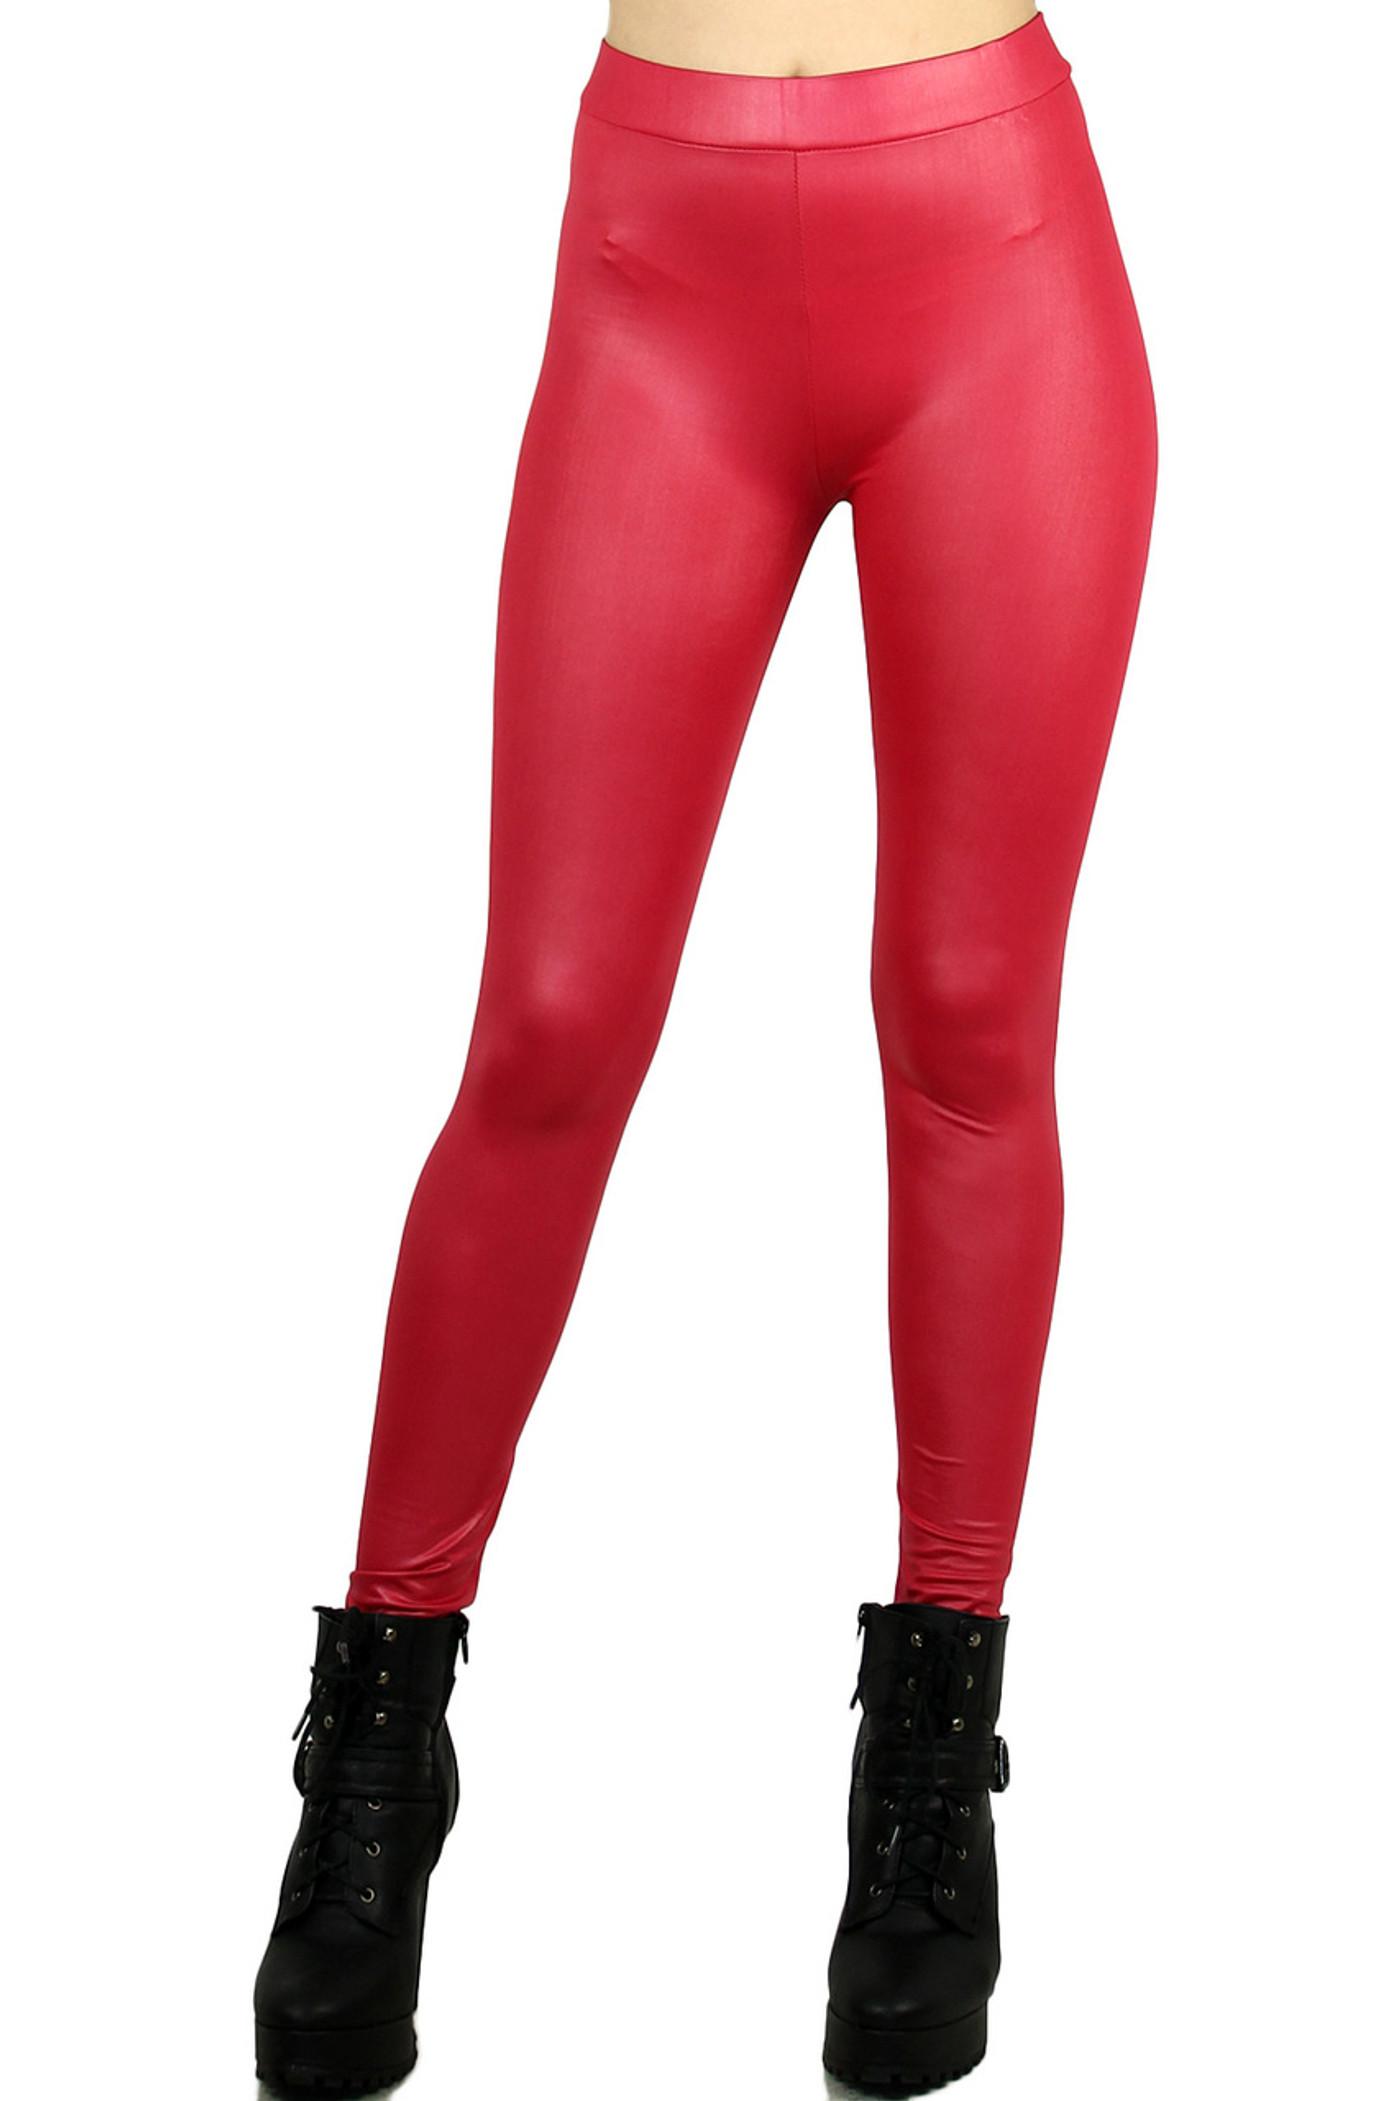 Leggings For Women Red and Green Combo Shining Lycra Cotton Size S (Small)  - Bhetvastu : : Fashion